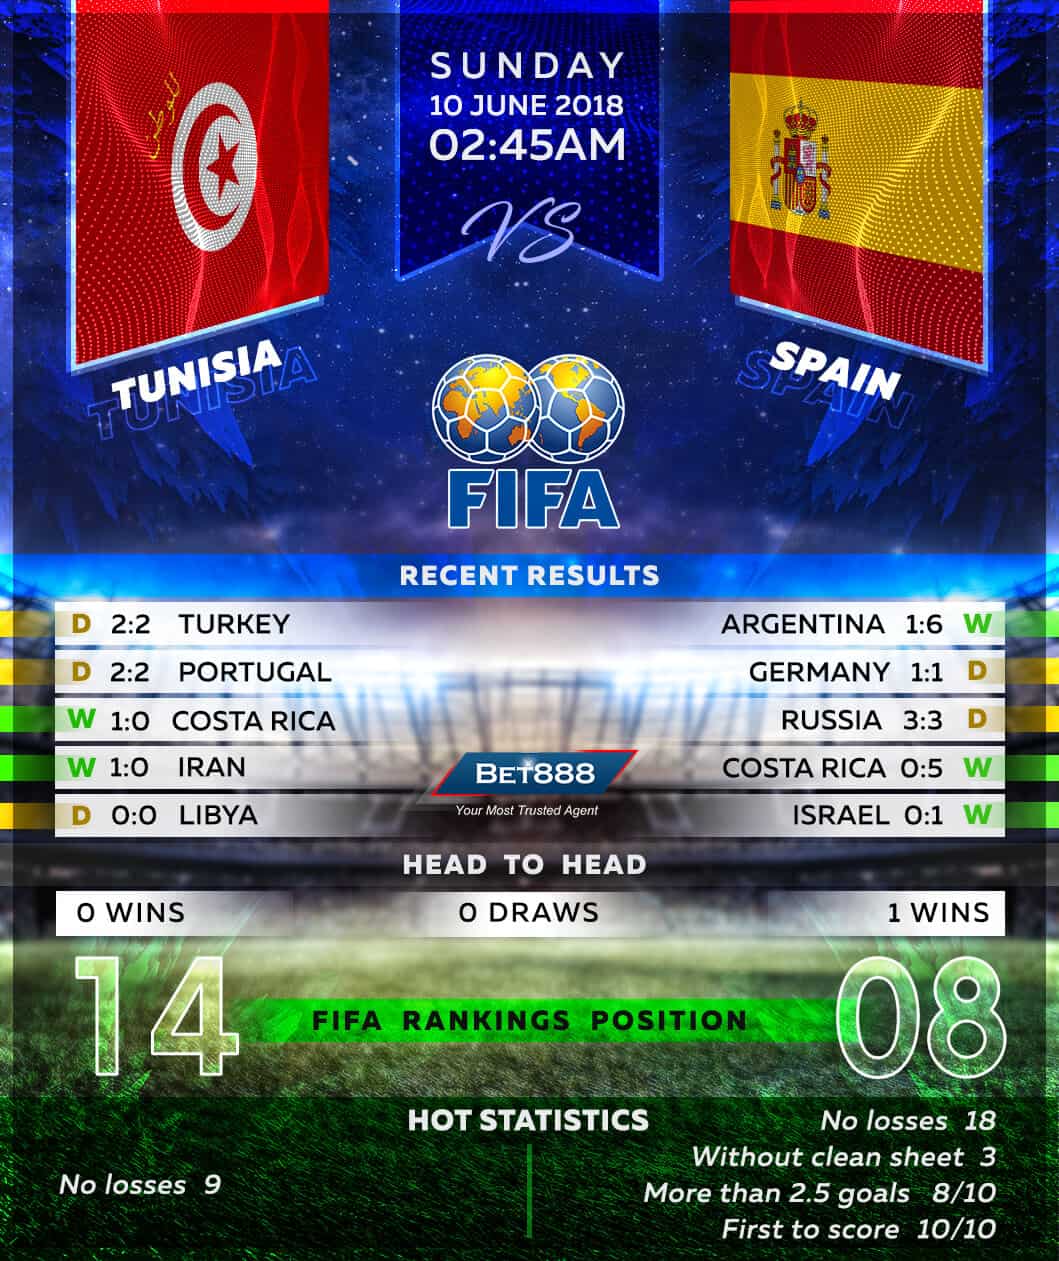 Spain vs Tunisia 10/06/18